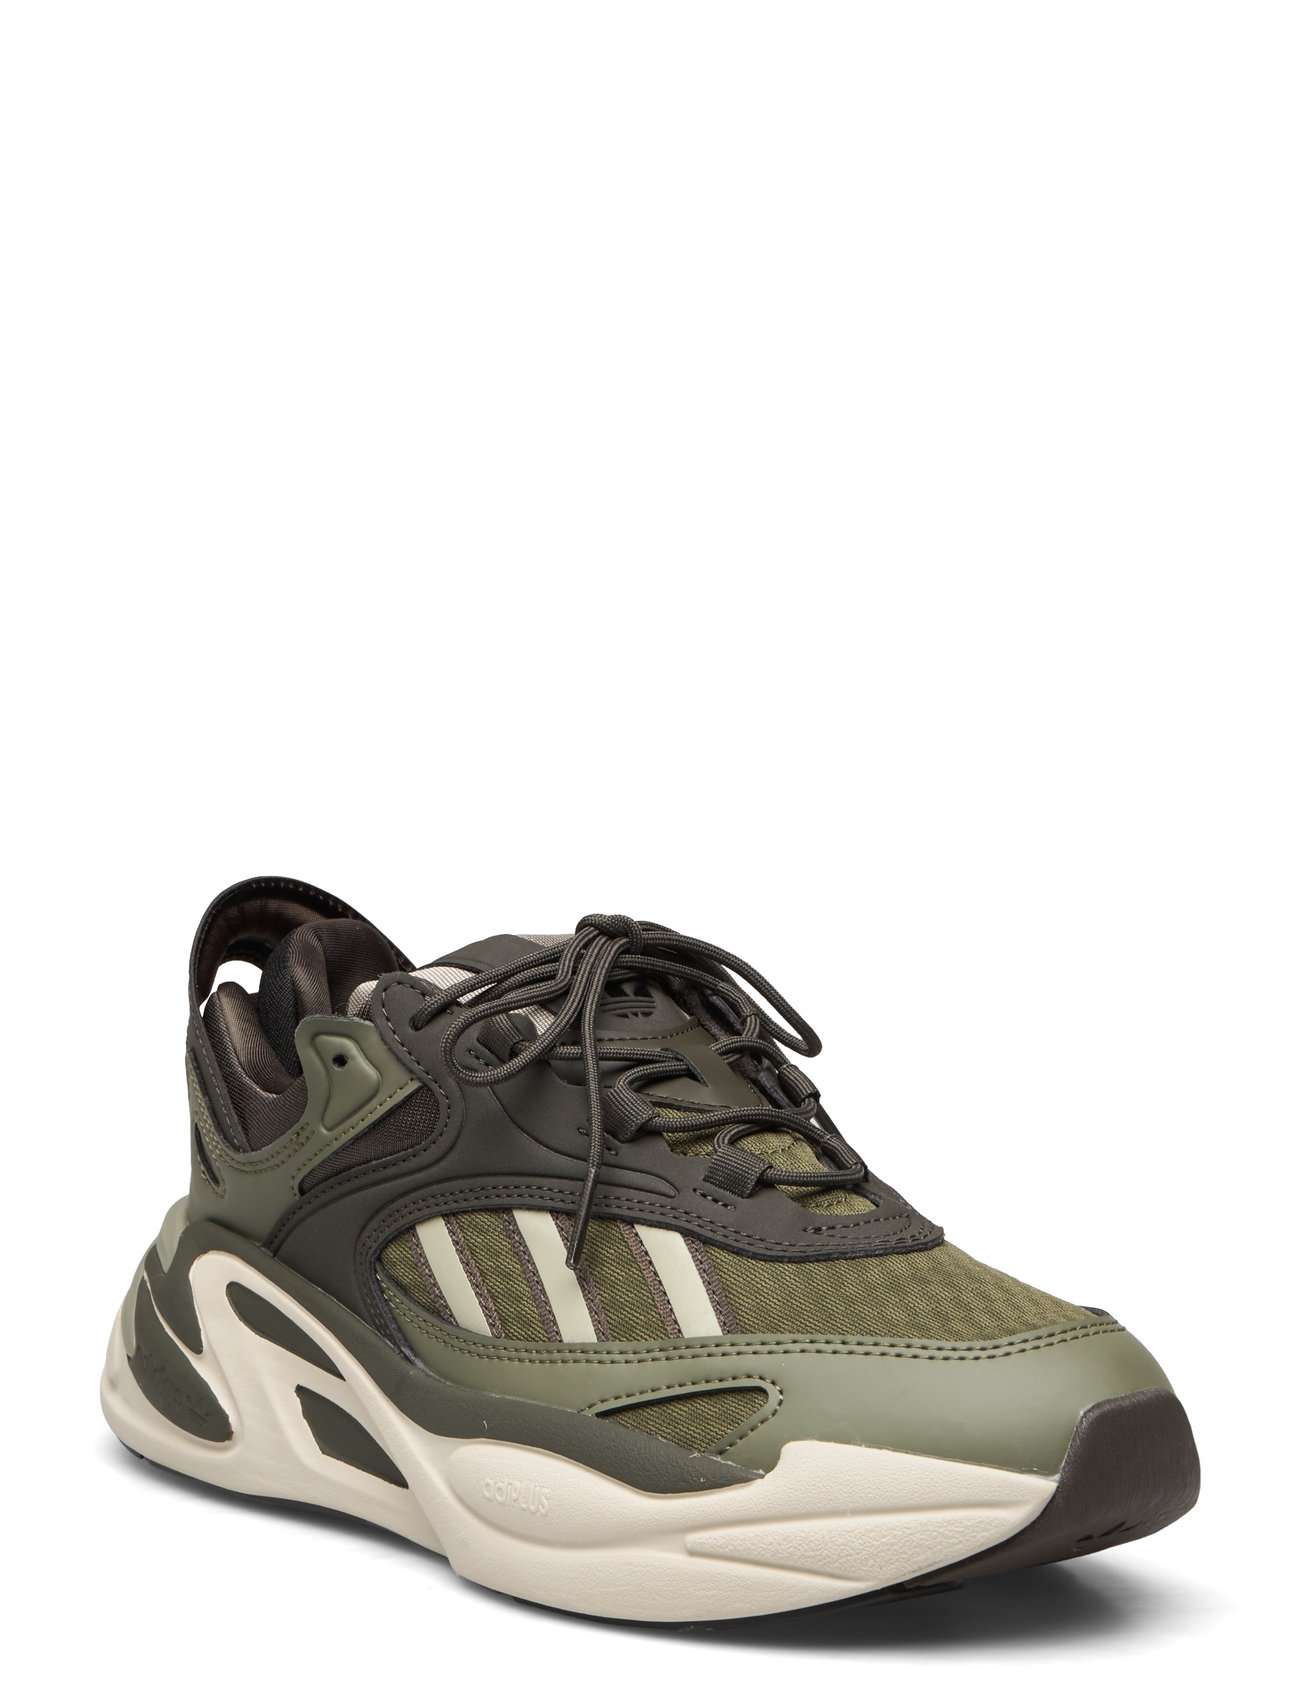 Ozmorph Shoes Sport Sneakers Low-top Sneakers Khaki Green Adidas Originals